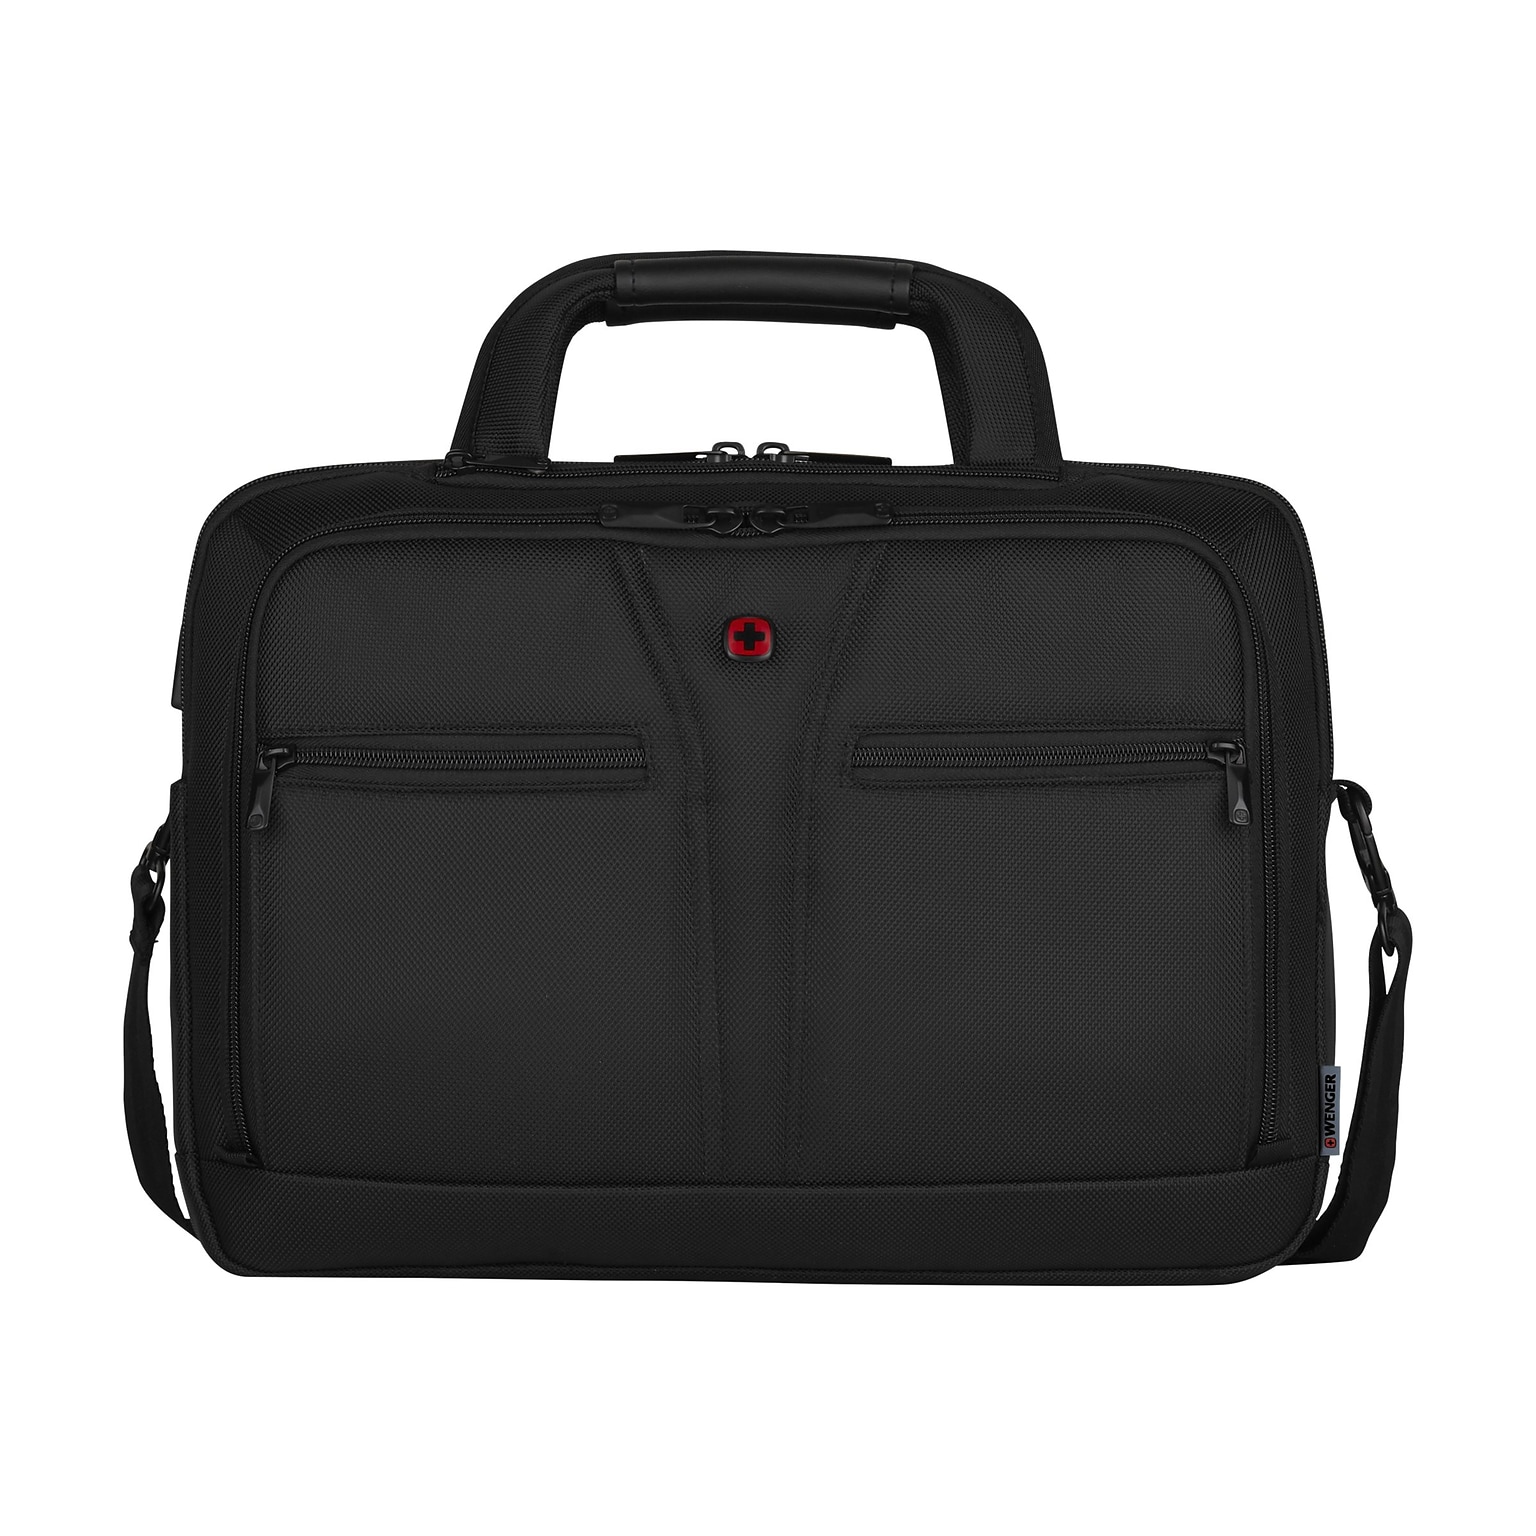 Wenger BC Pro 16 Laptop Bag, Black (606464)